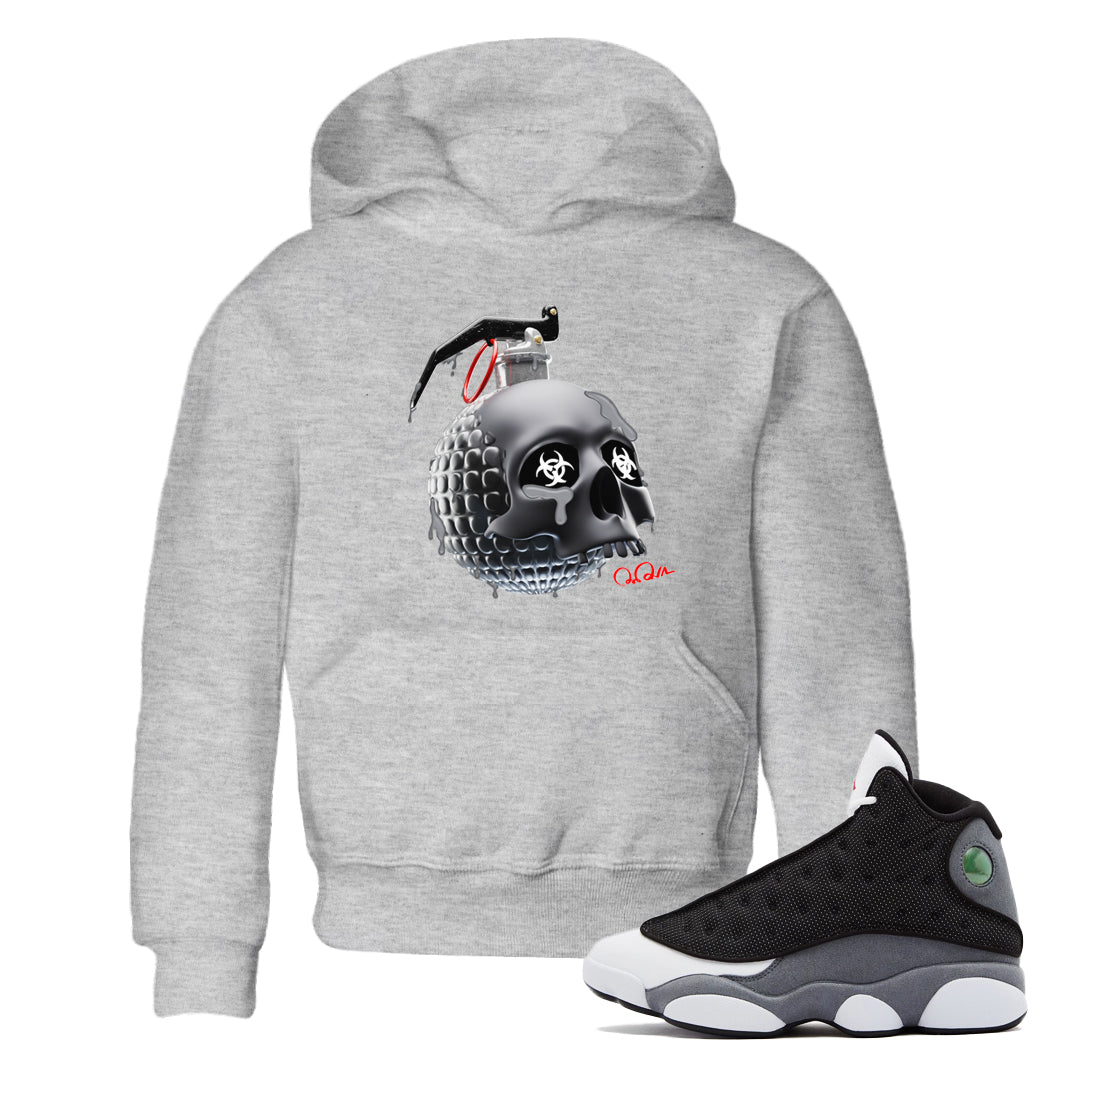 Air Jordan 13 Black Flint Sneaker Tees Drip Gear Zone Skull Bomb Sneaker Tees AJ13 Retro Black Flint Shirt Kids Shirts Heather Grey 1